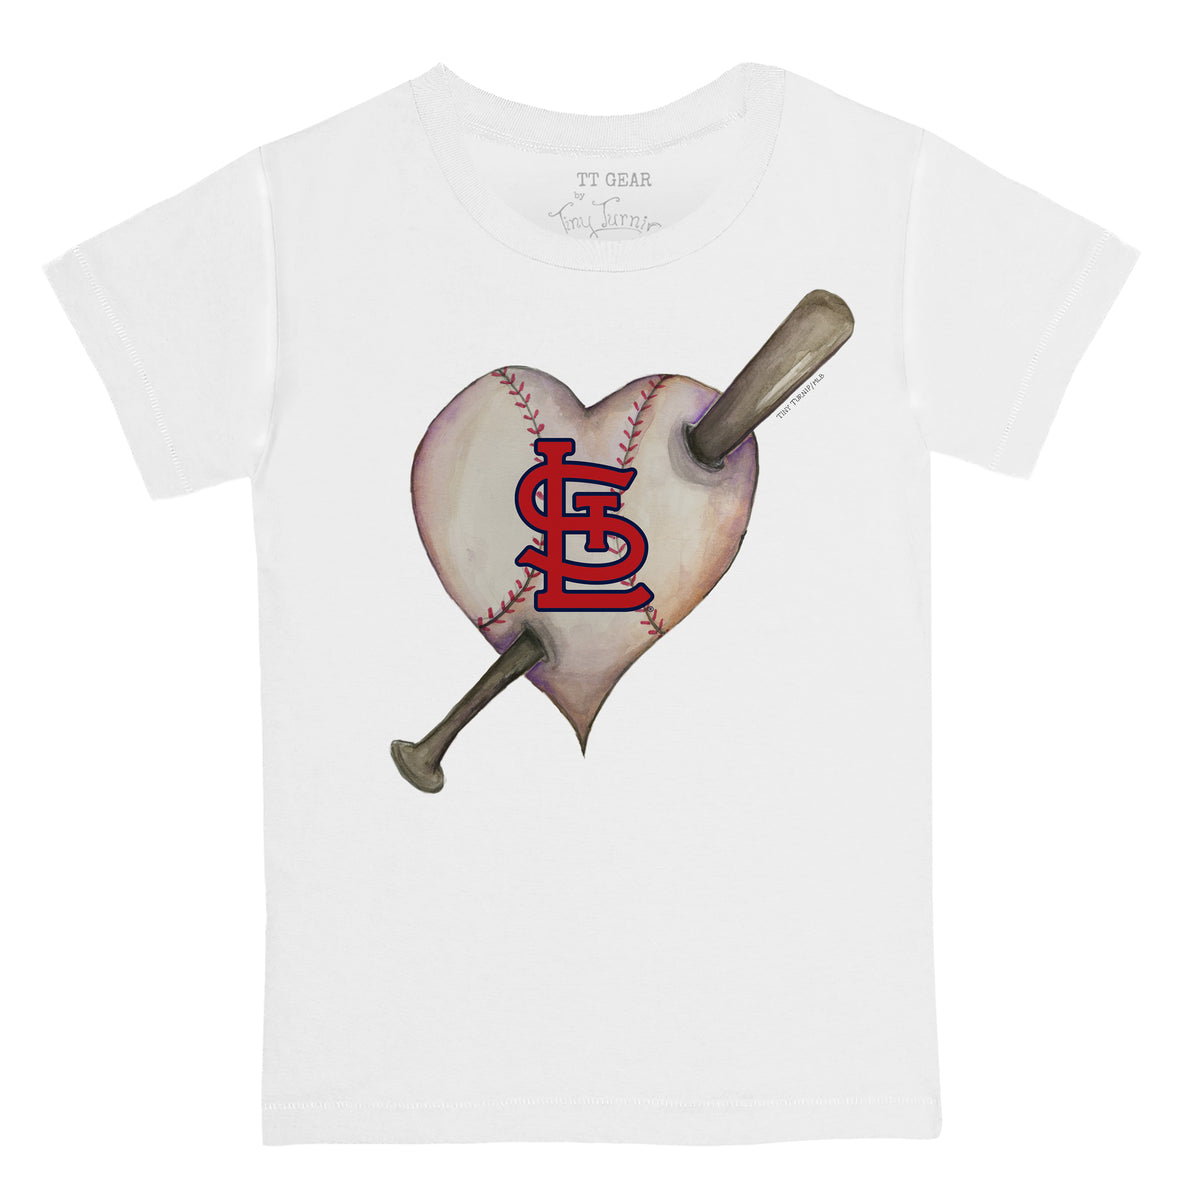 St. Louis Cardinals Hot Bats Tee Shirt Youth Medium (8-10) / Red